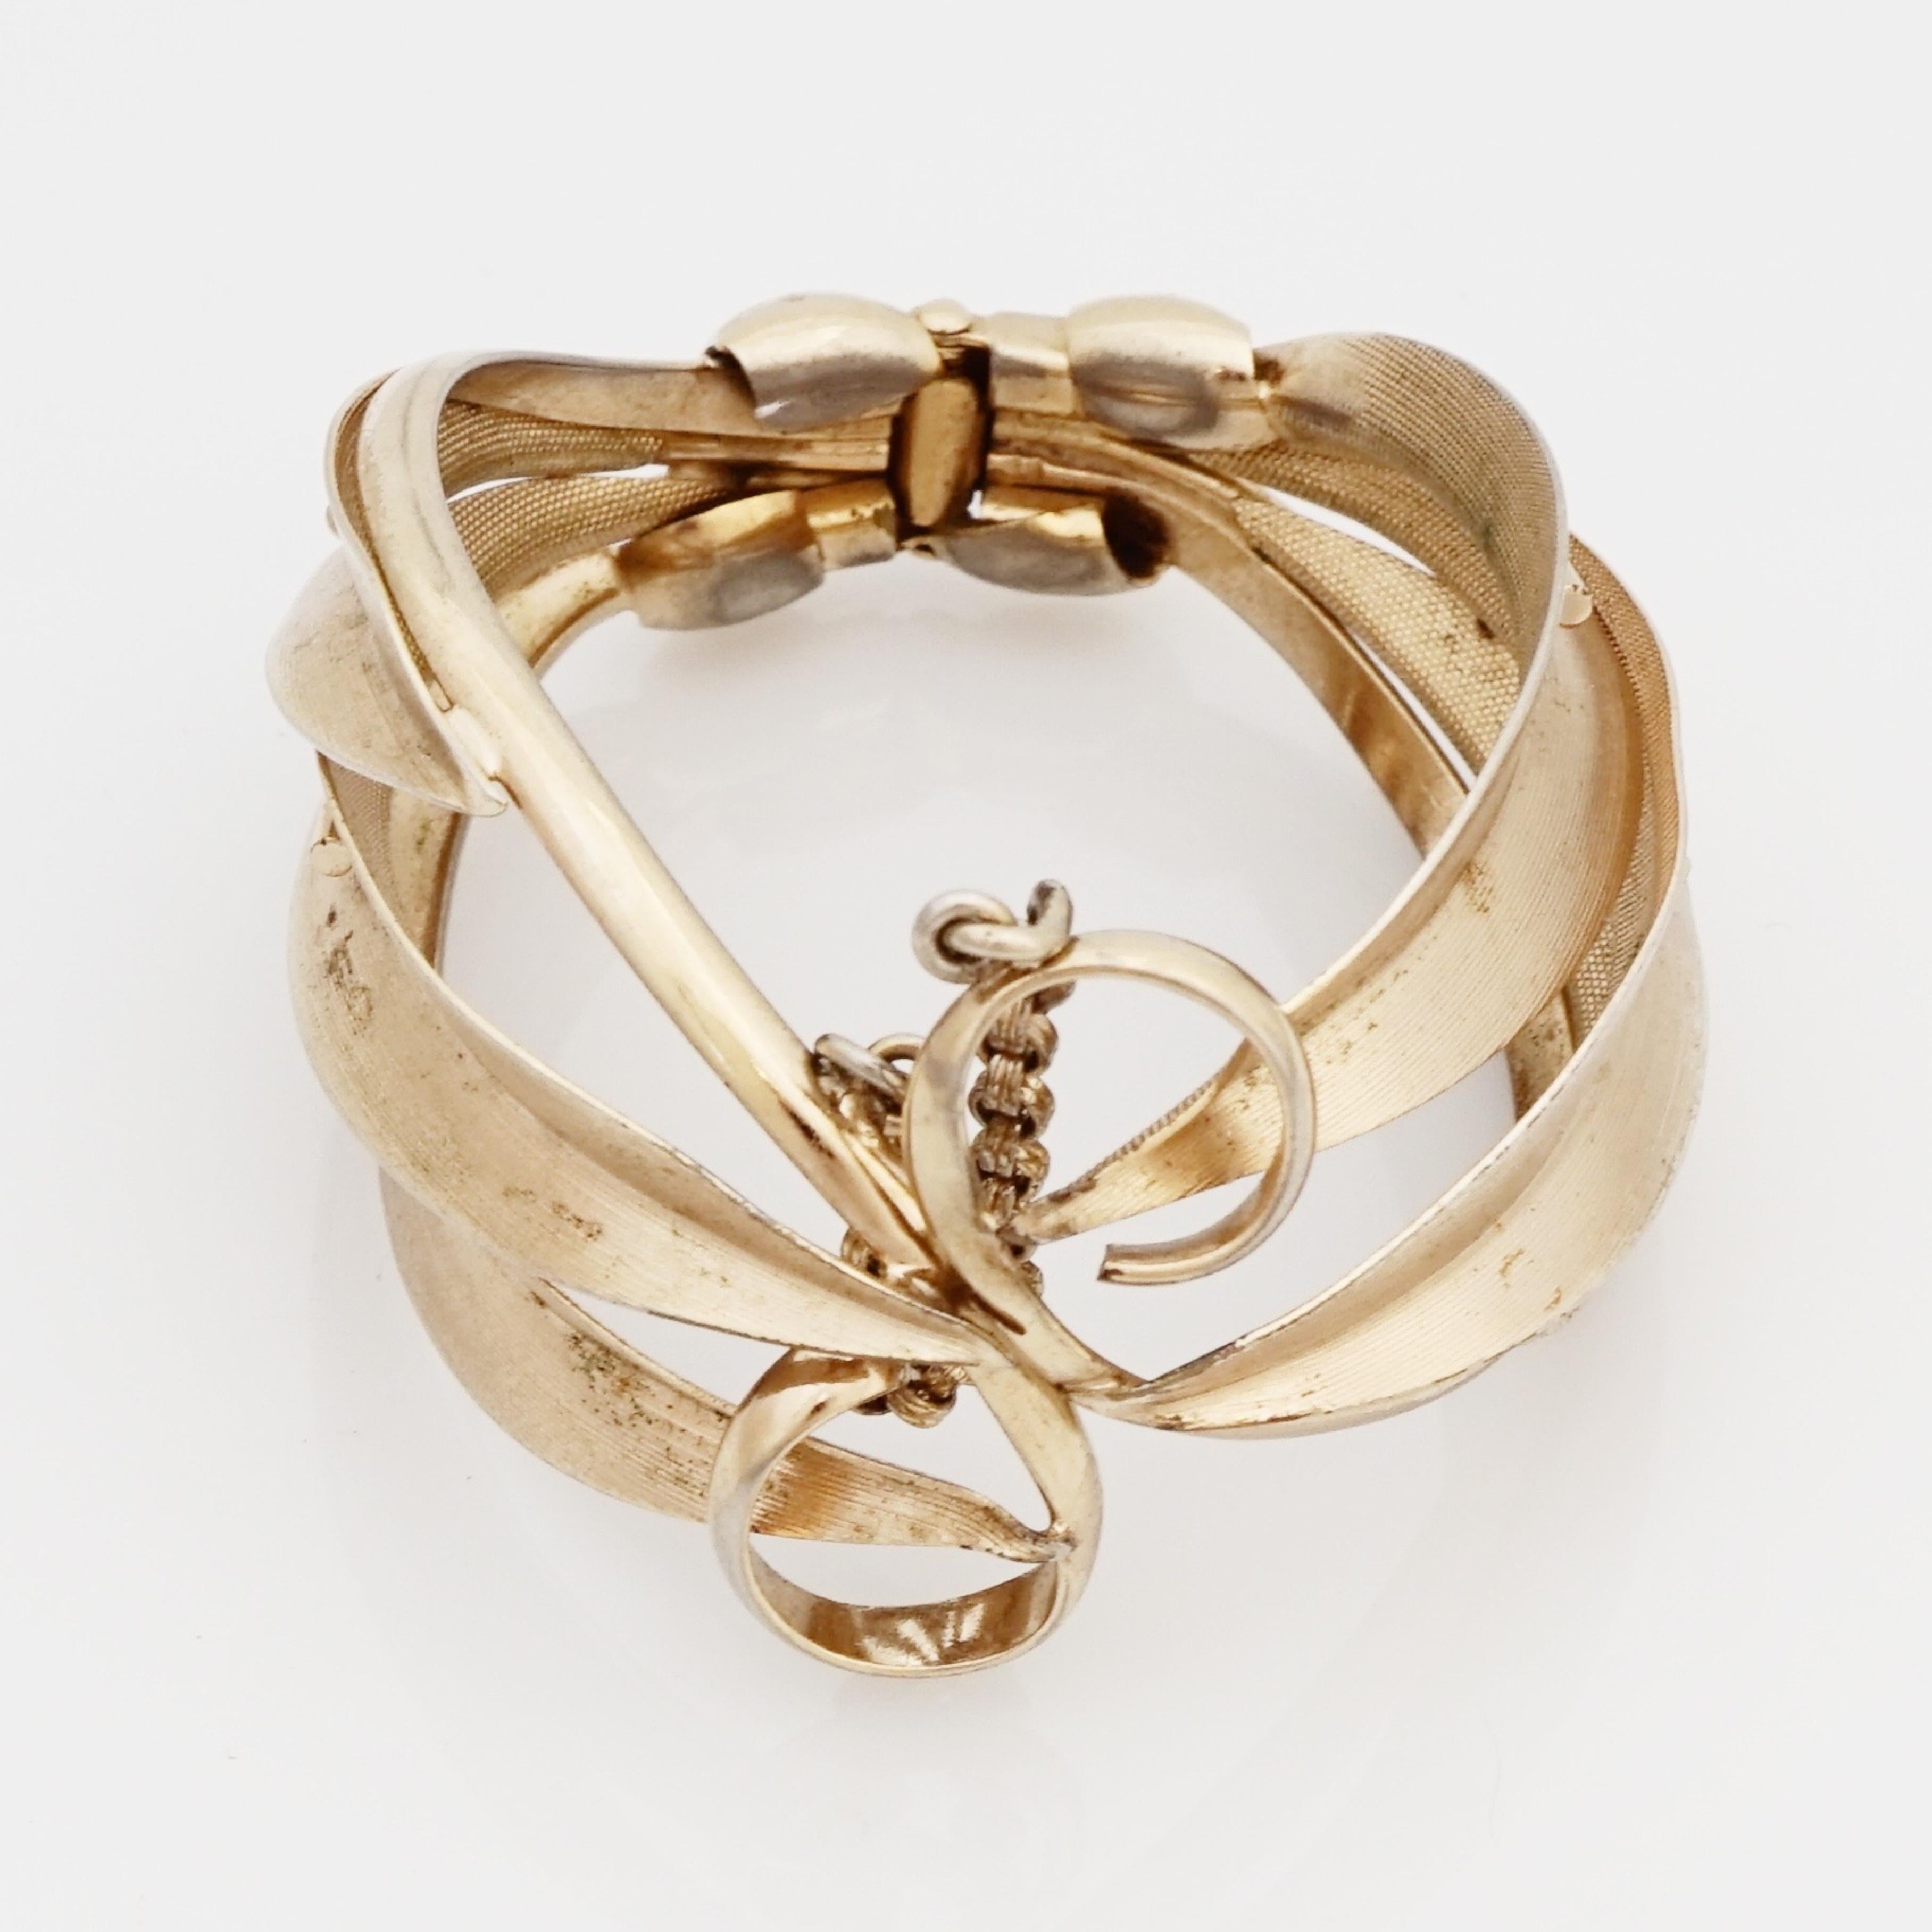 Modern Art Deco Gold Hinged Cuff Bracelet With S-Swirl Motif By Napier, 1920s